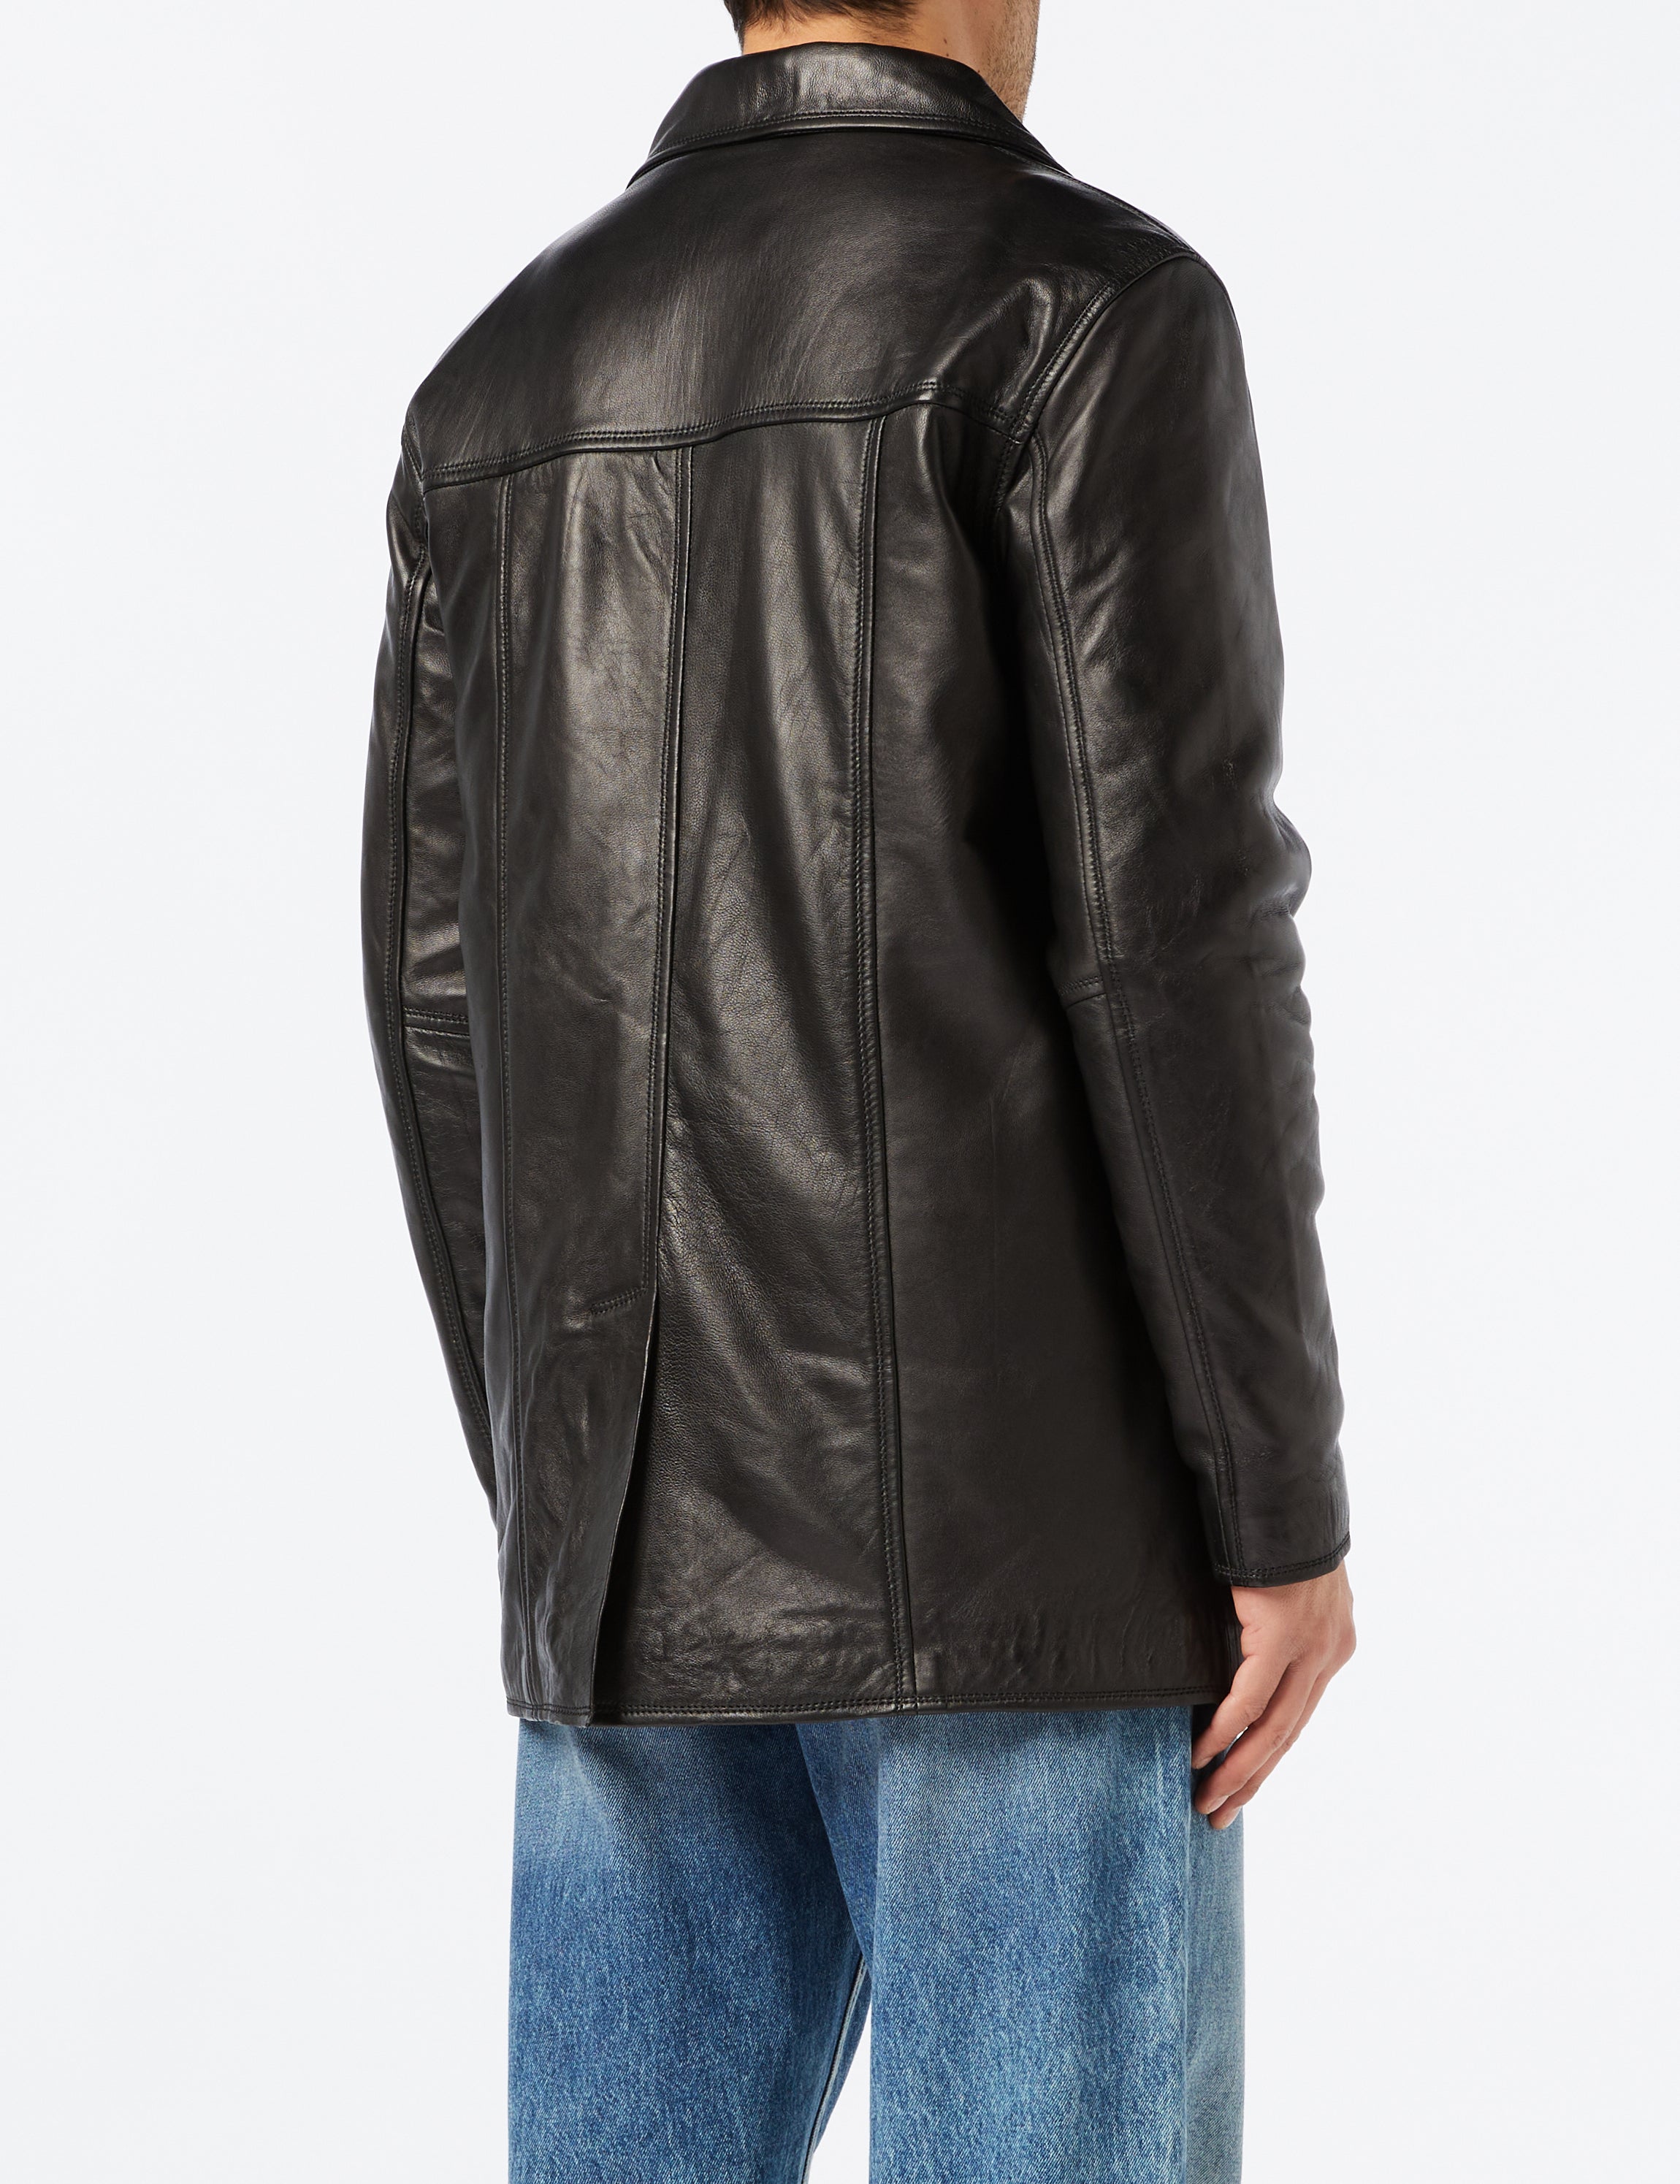 Mens Real Leather Blazer Style Vintage Smart Casual Black Reefer Jacket